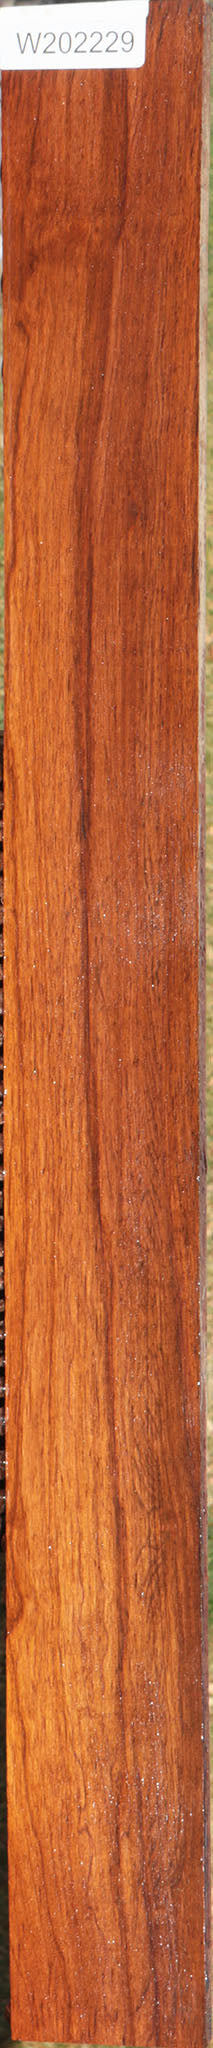 Spiderweb Figured Panama Rosewood Lumber